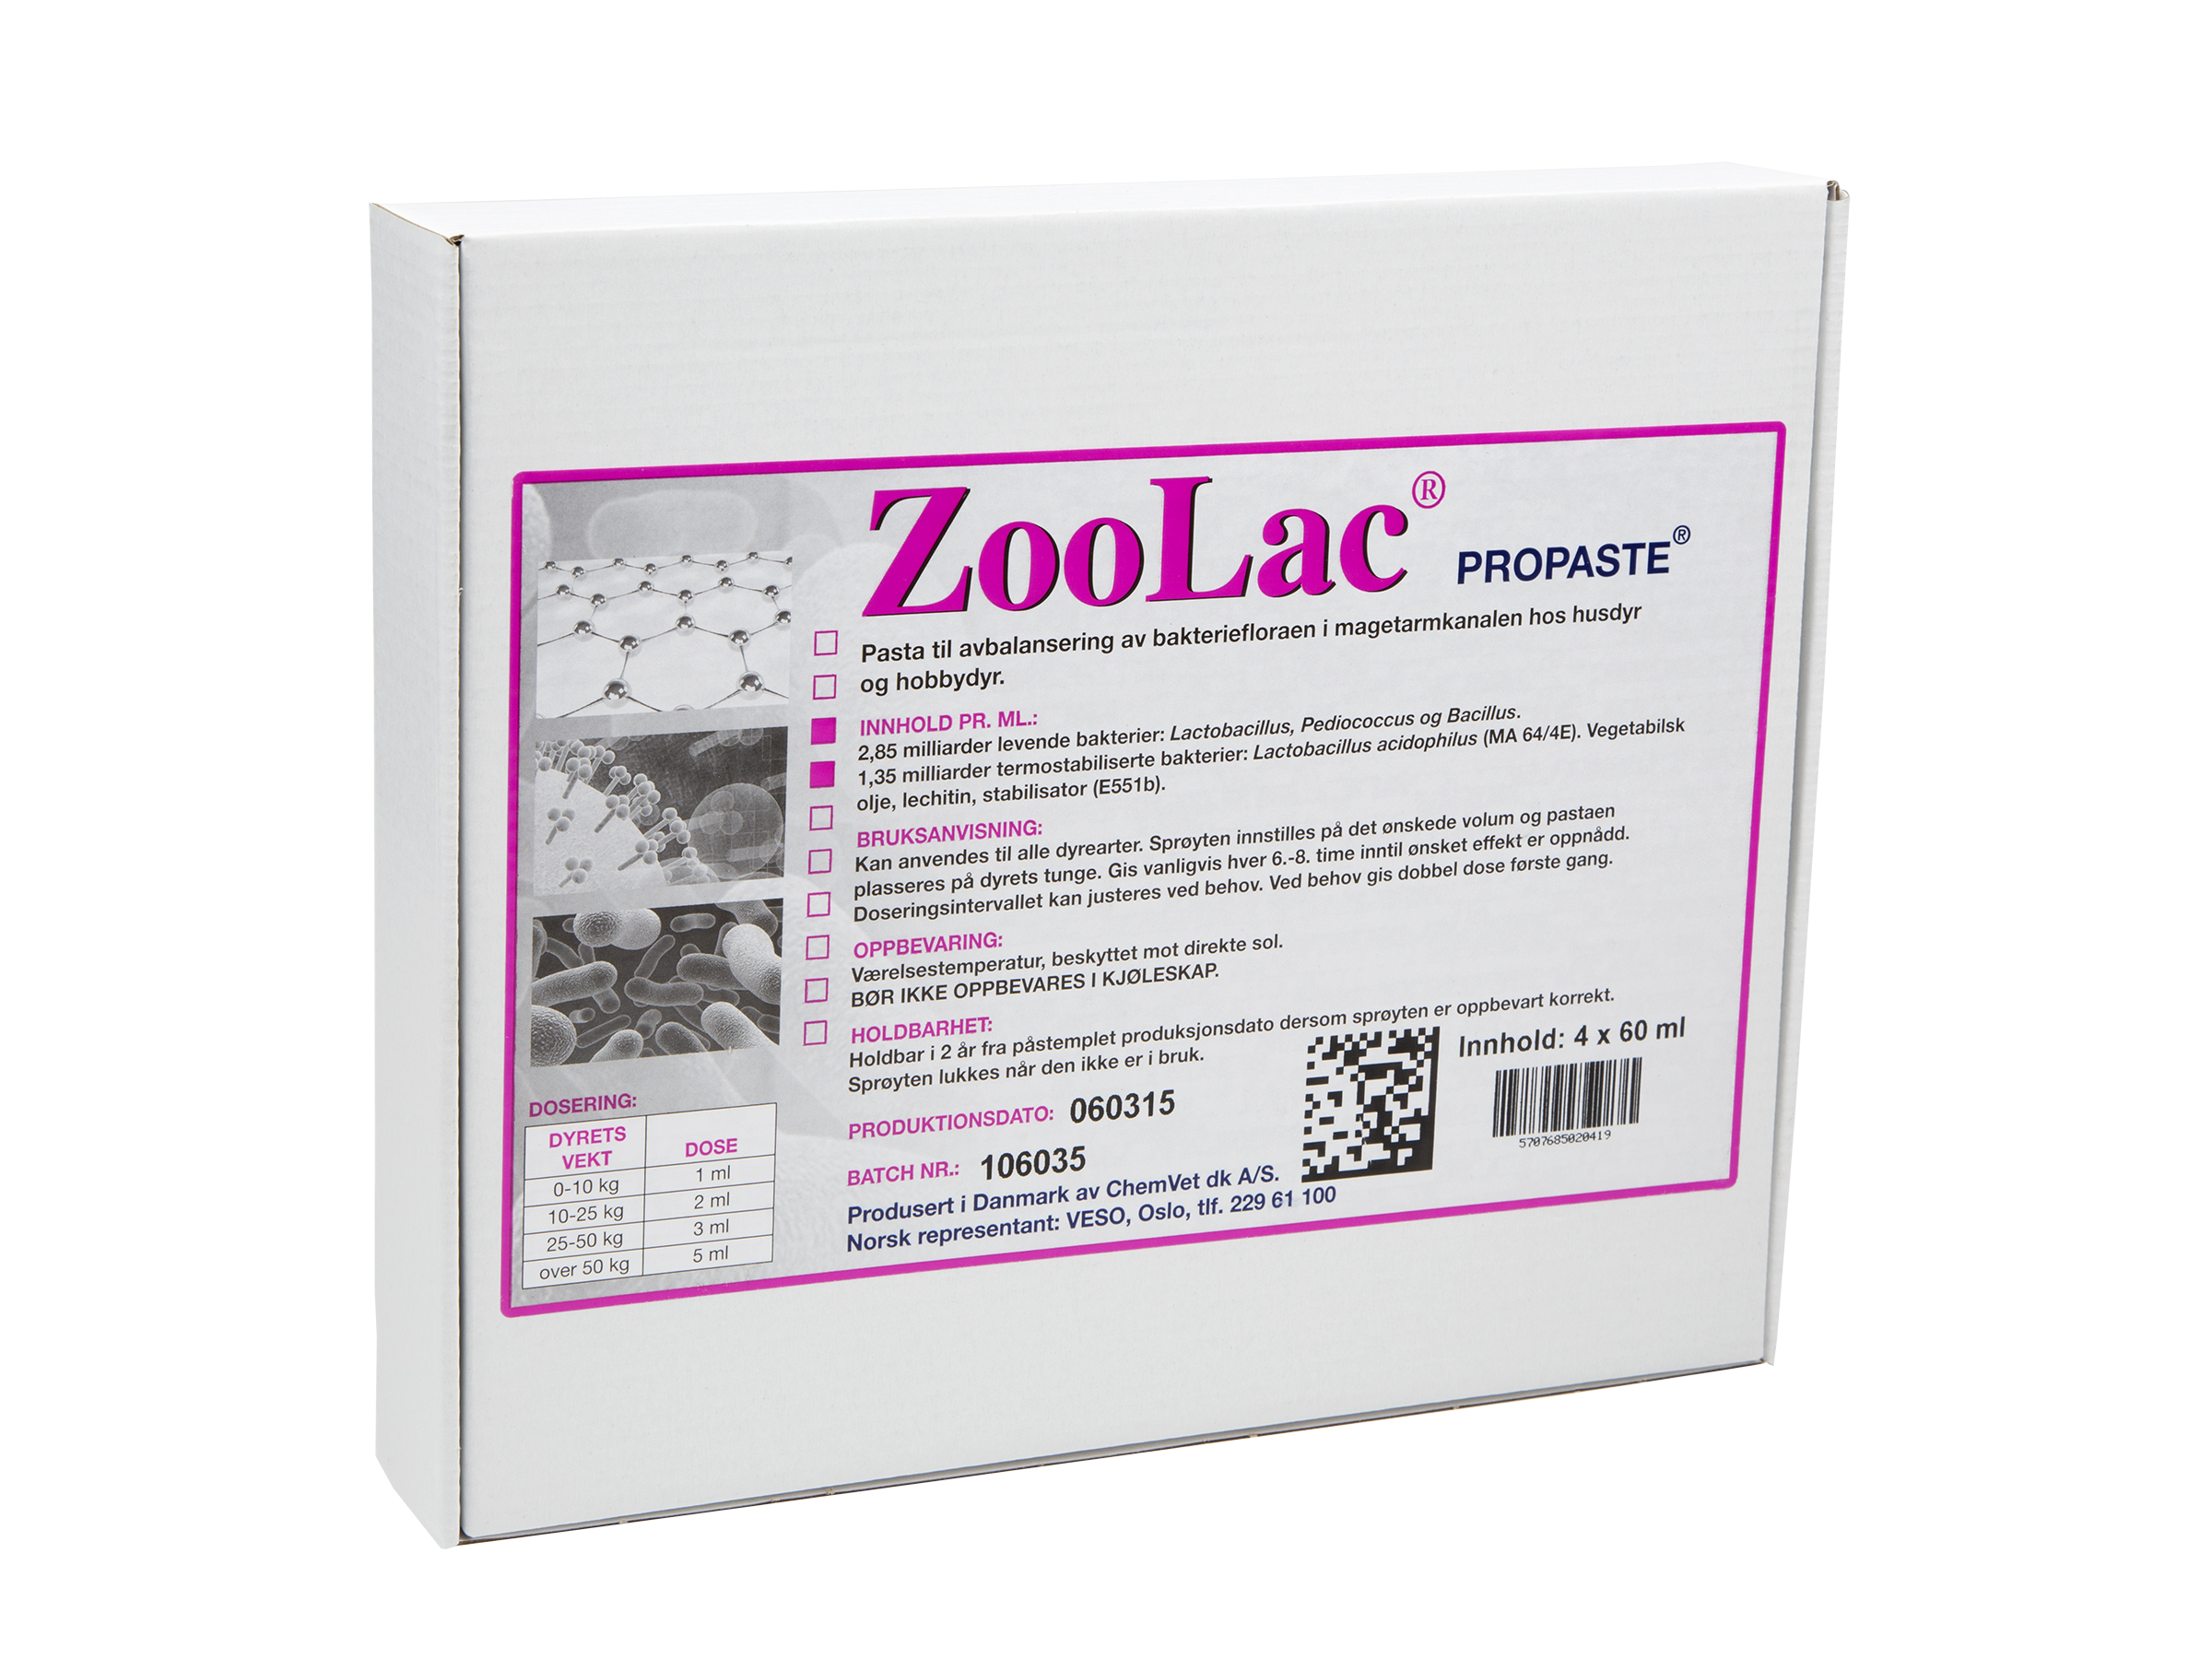 Zoolac Propaste, 4 x 60 ml